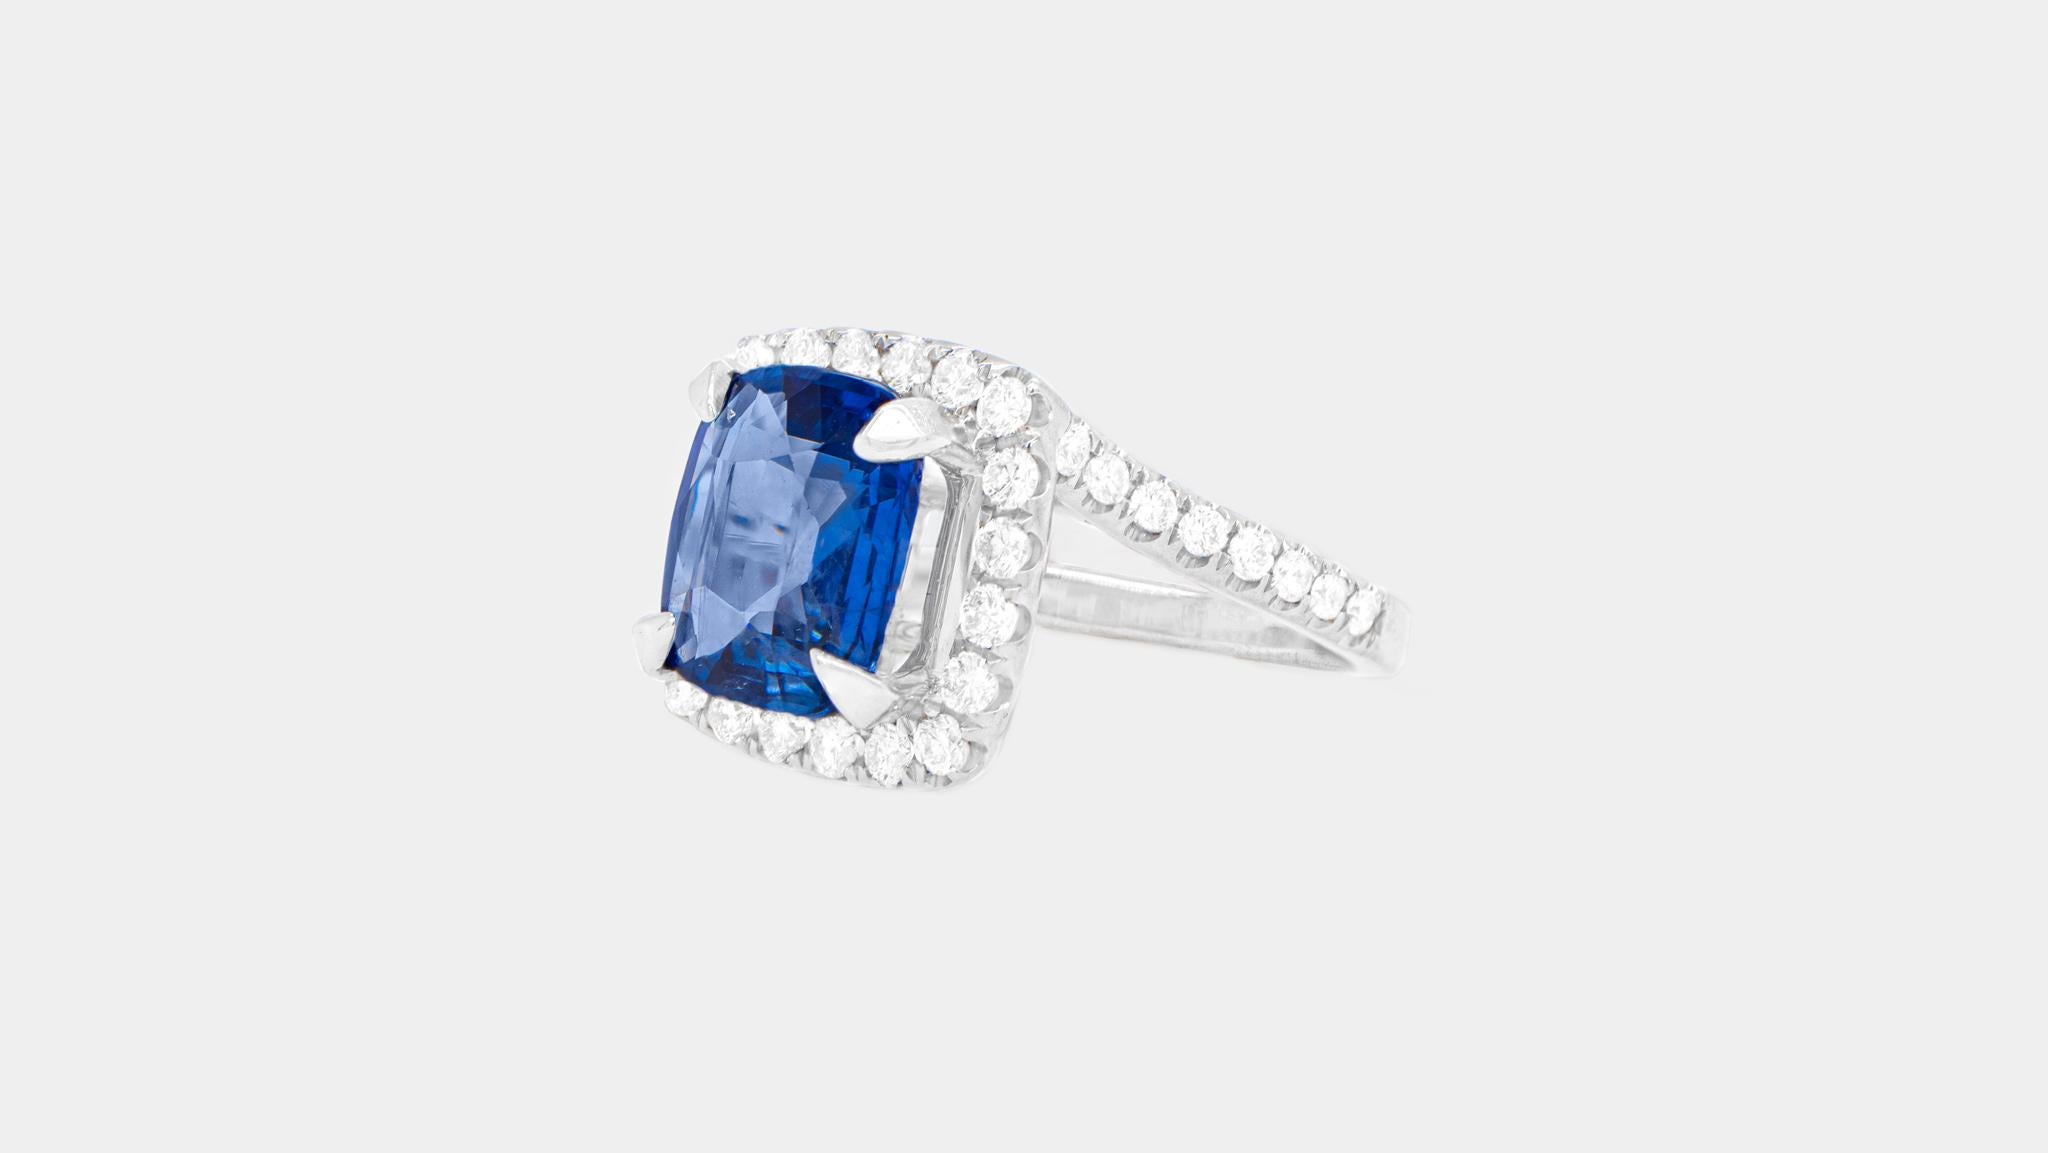 4 carat sapphire engagement ring